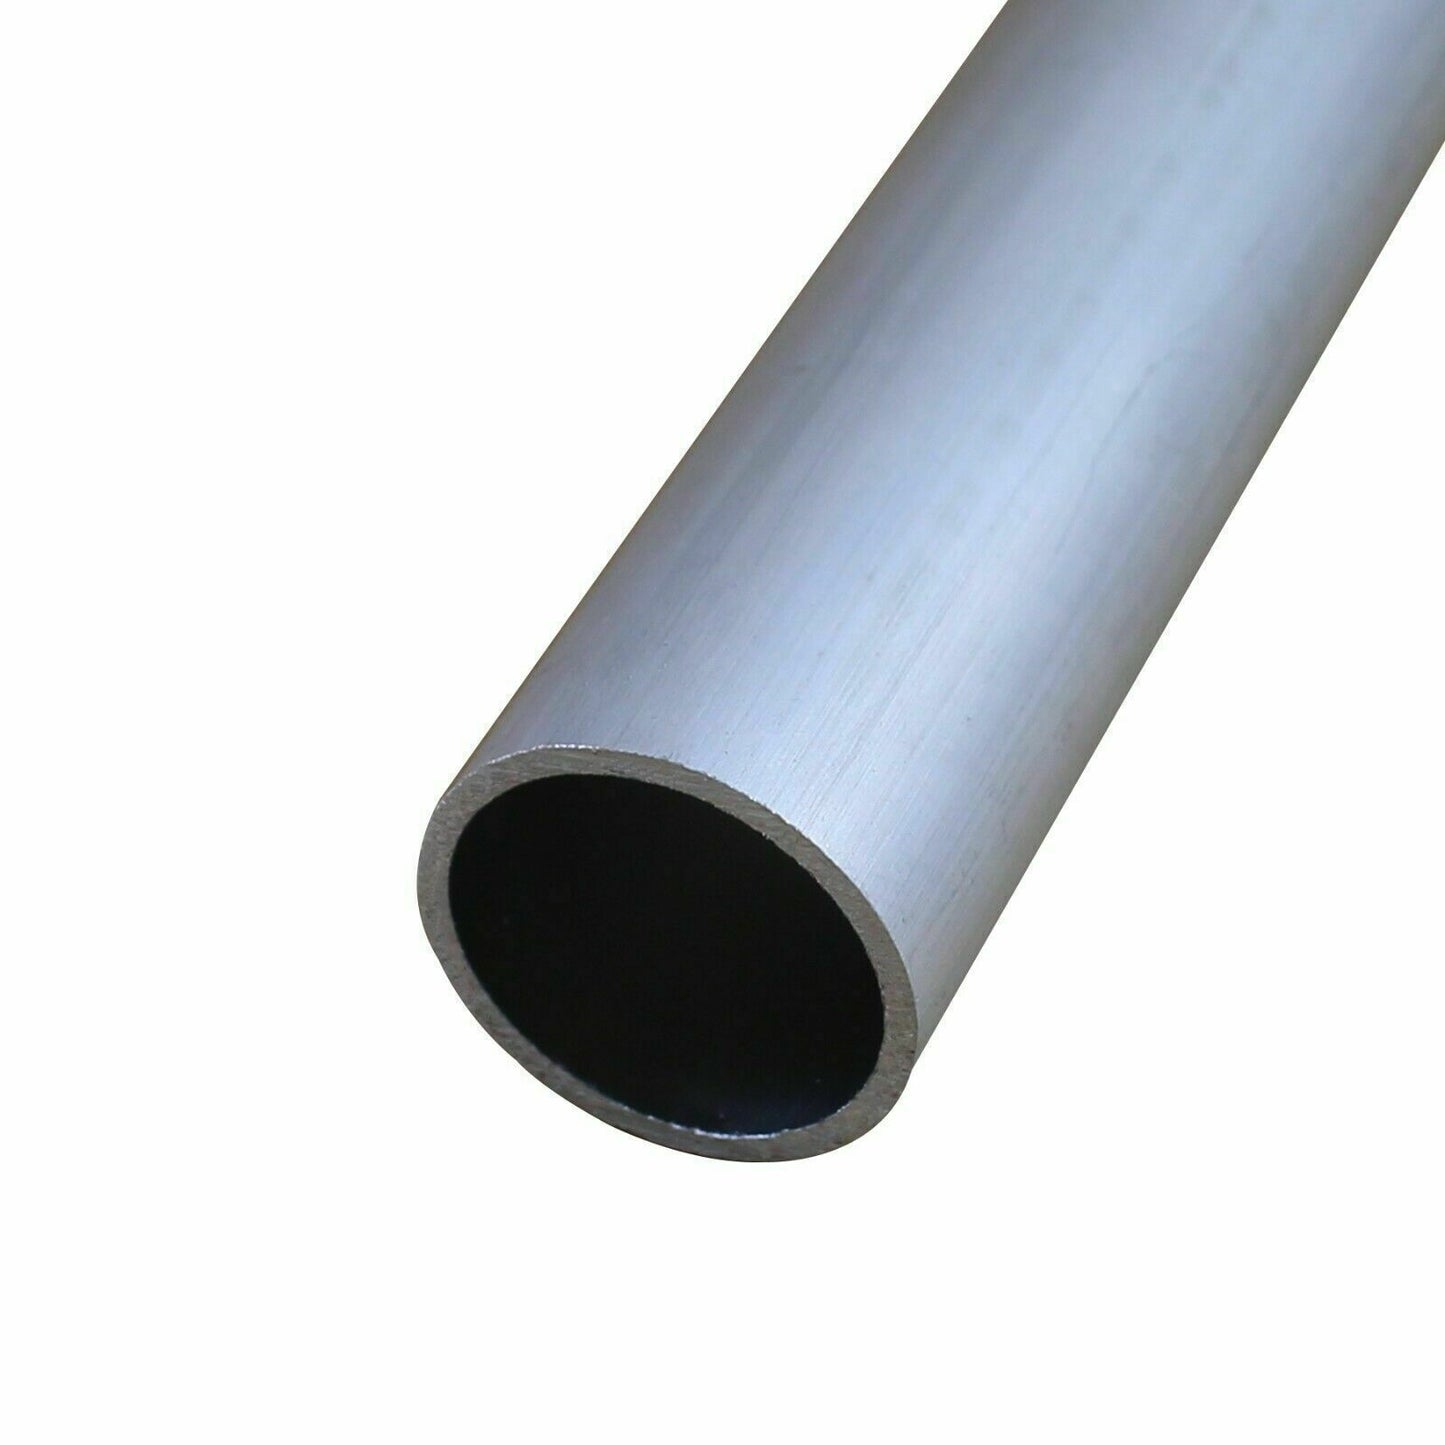 OD 34 mm ID 28 mm 1 Pcs Aluminum Round Tube Pipe